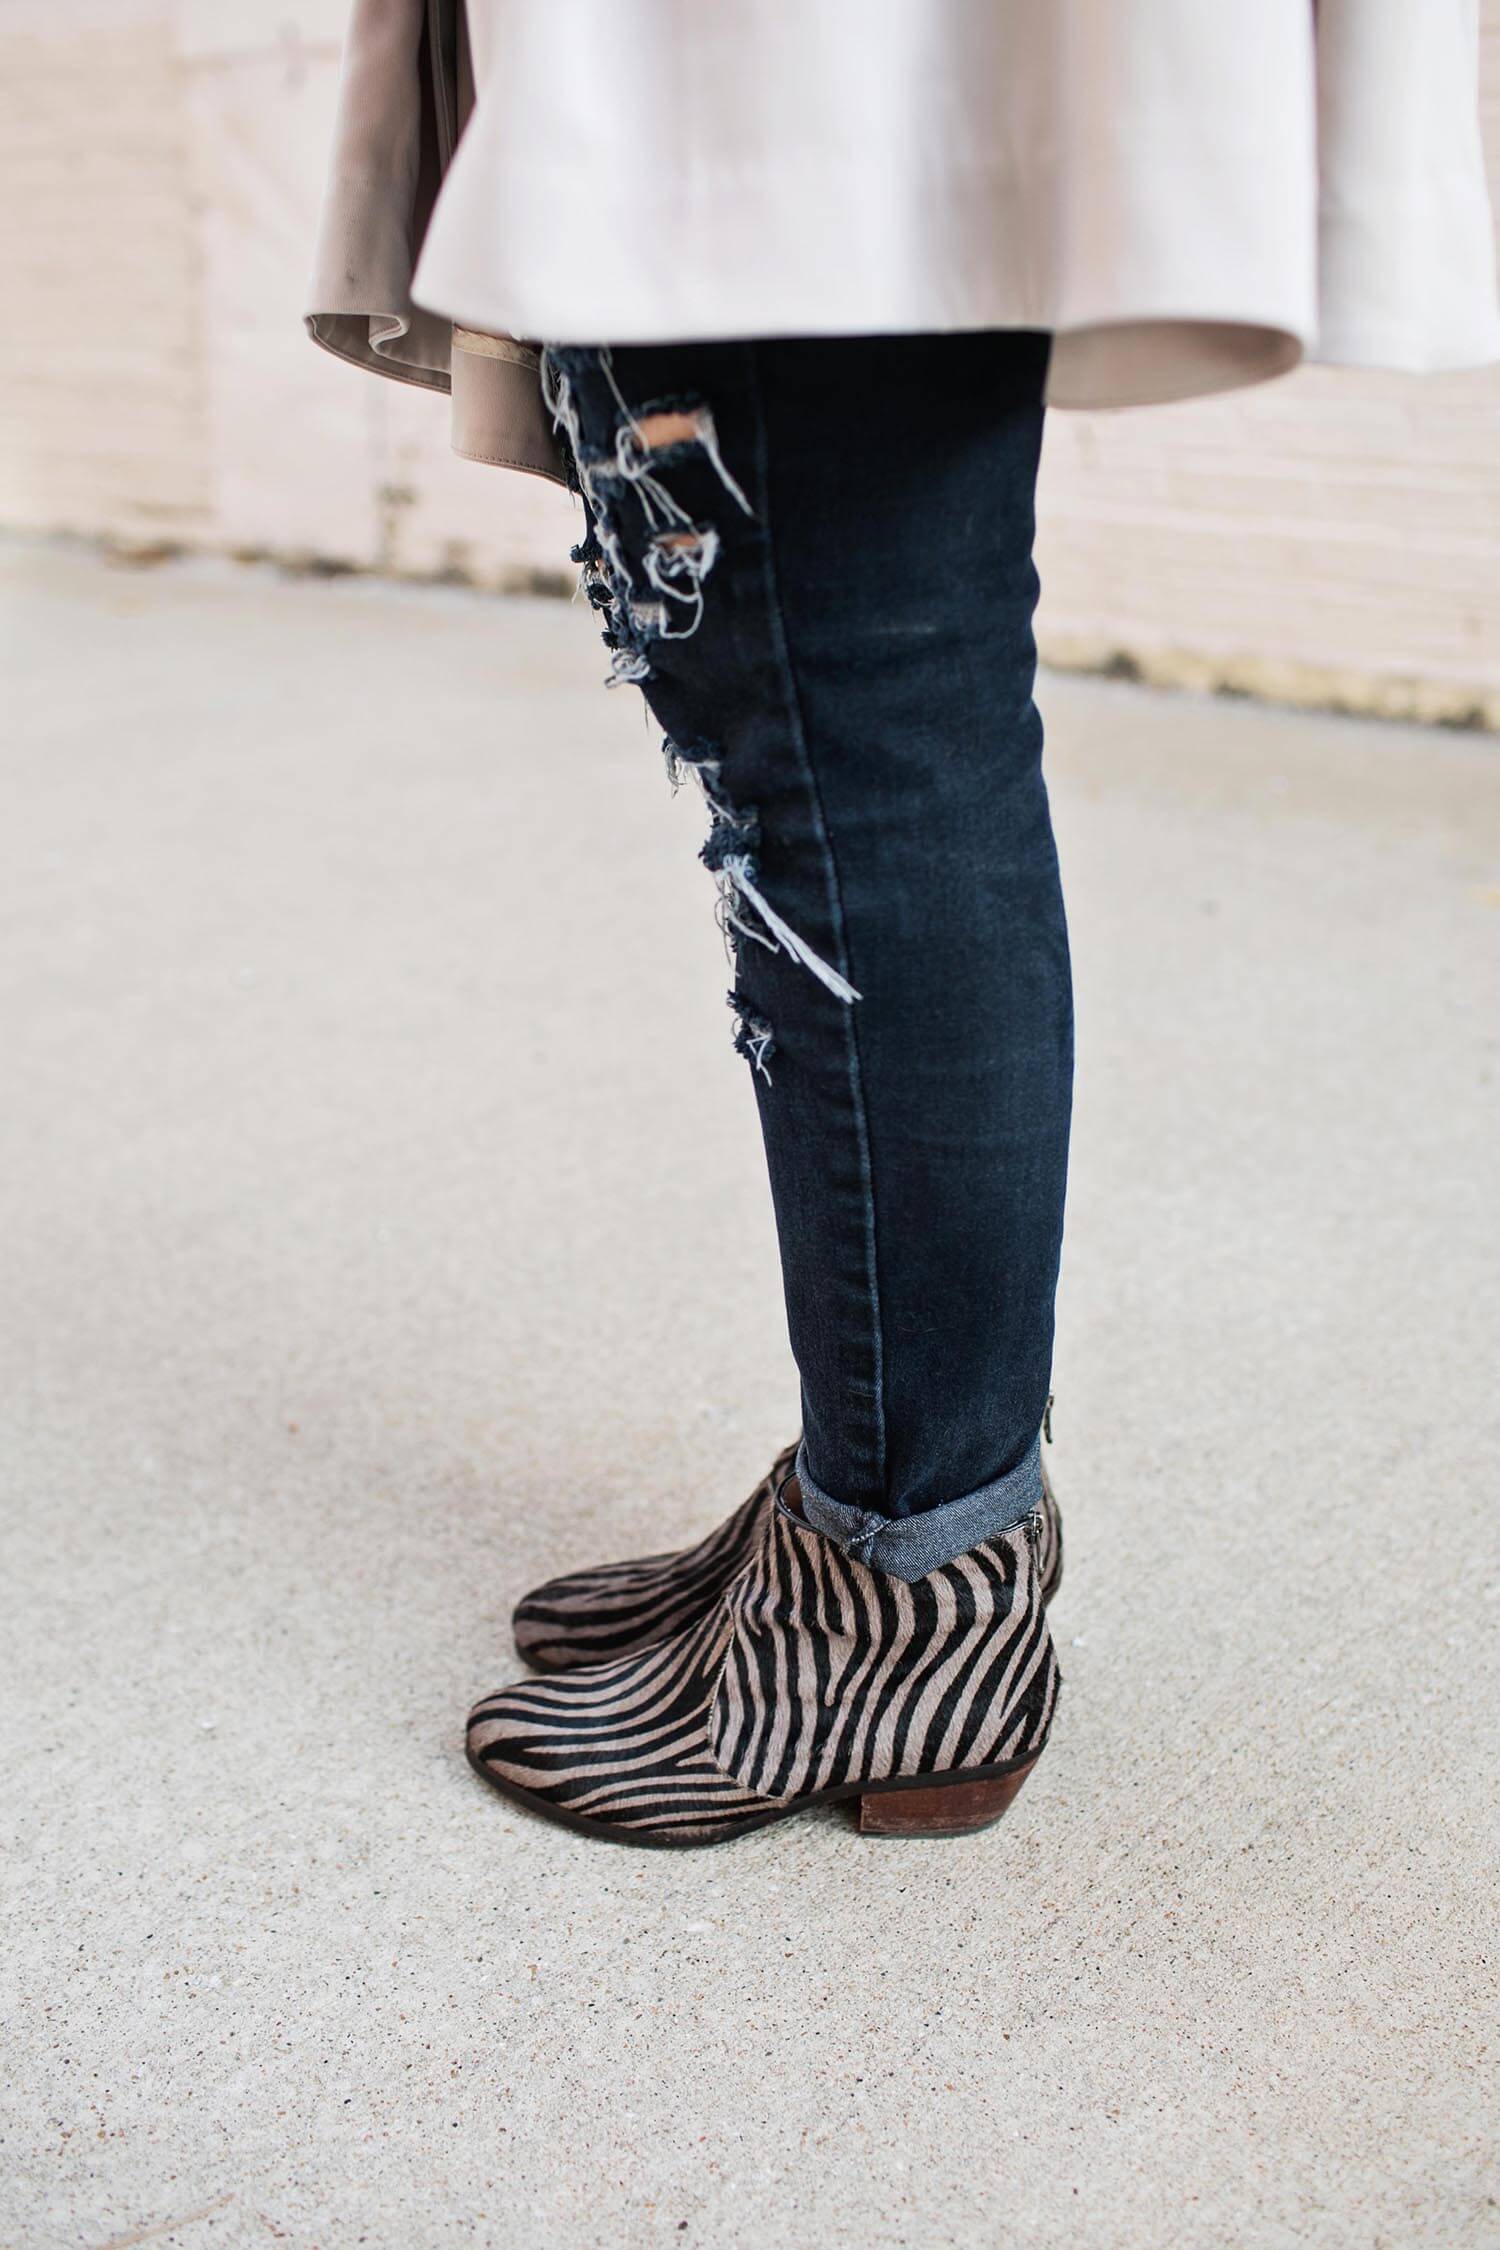 Zebra boots